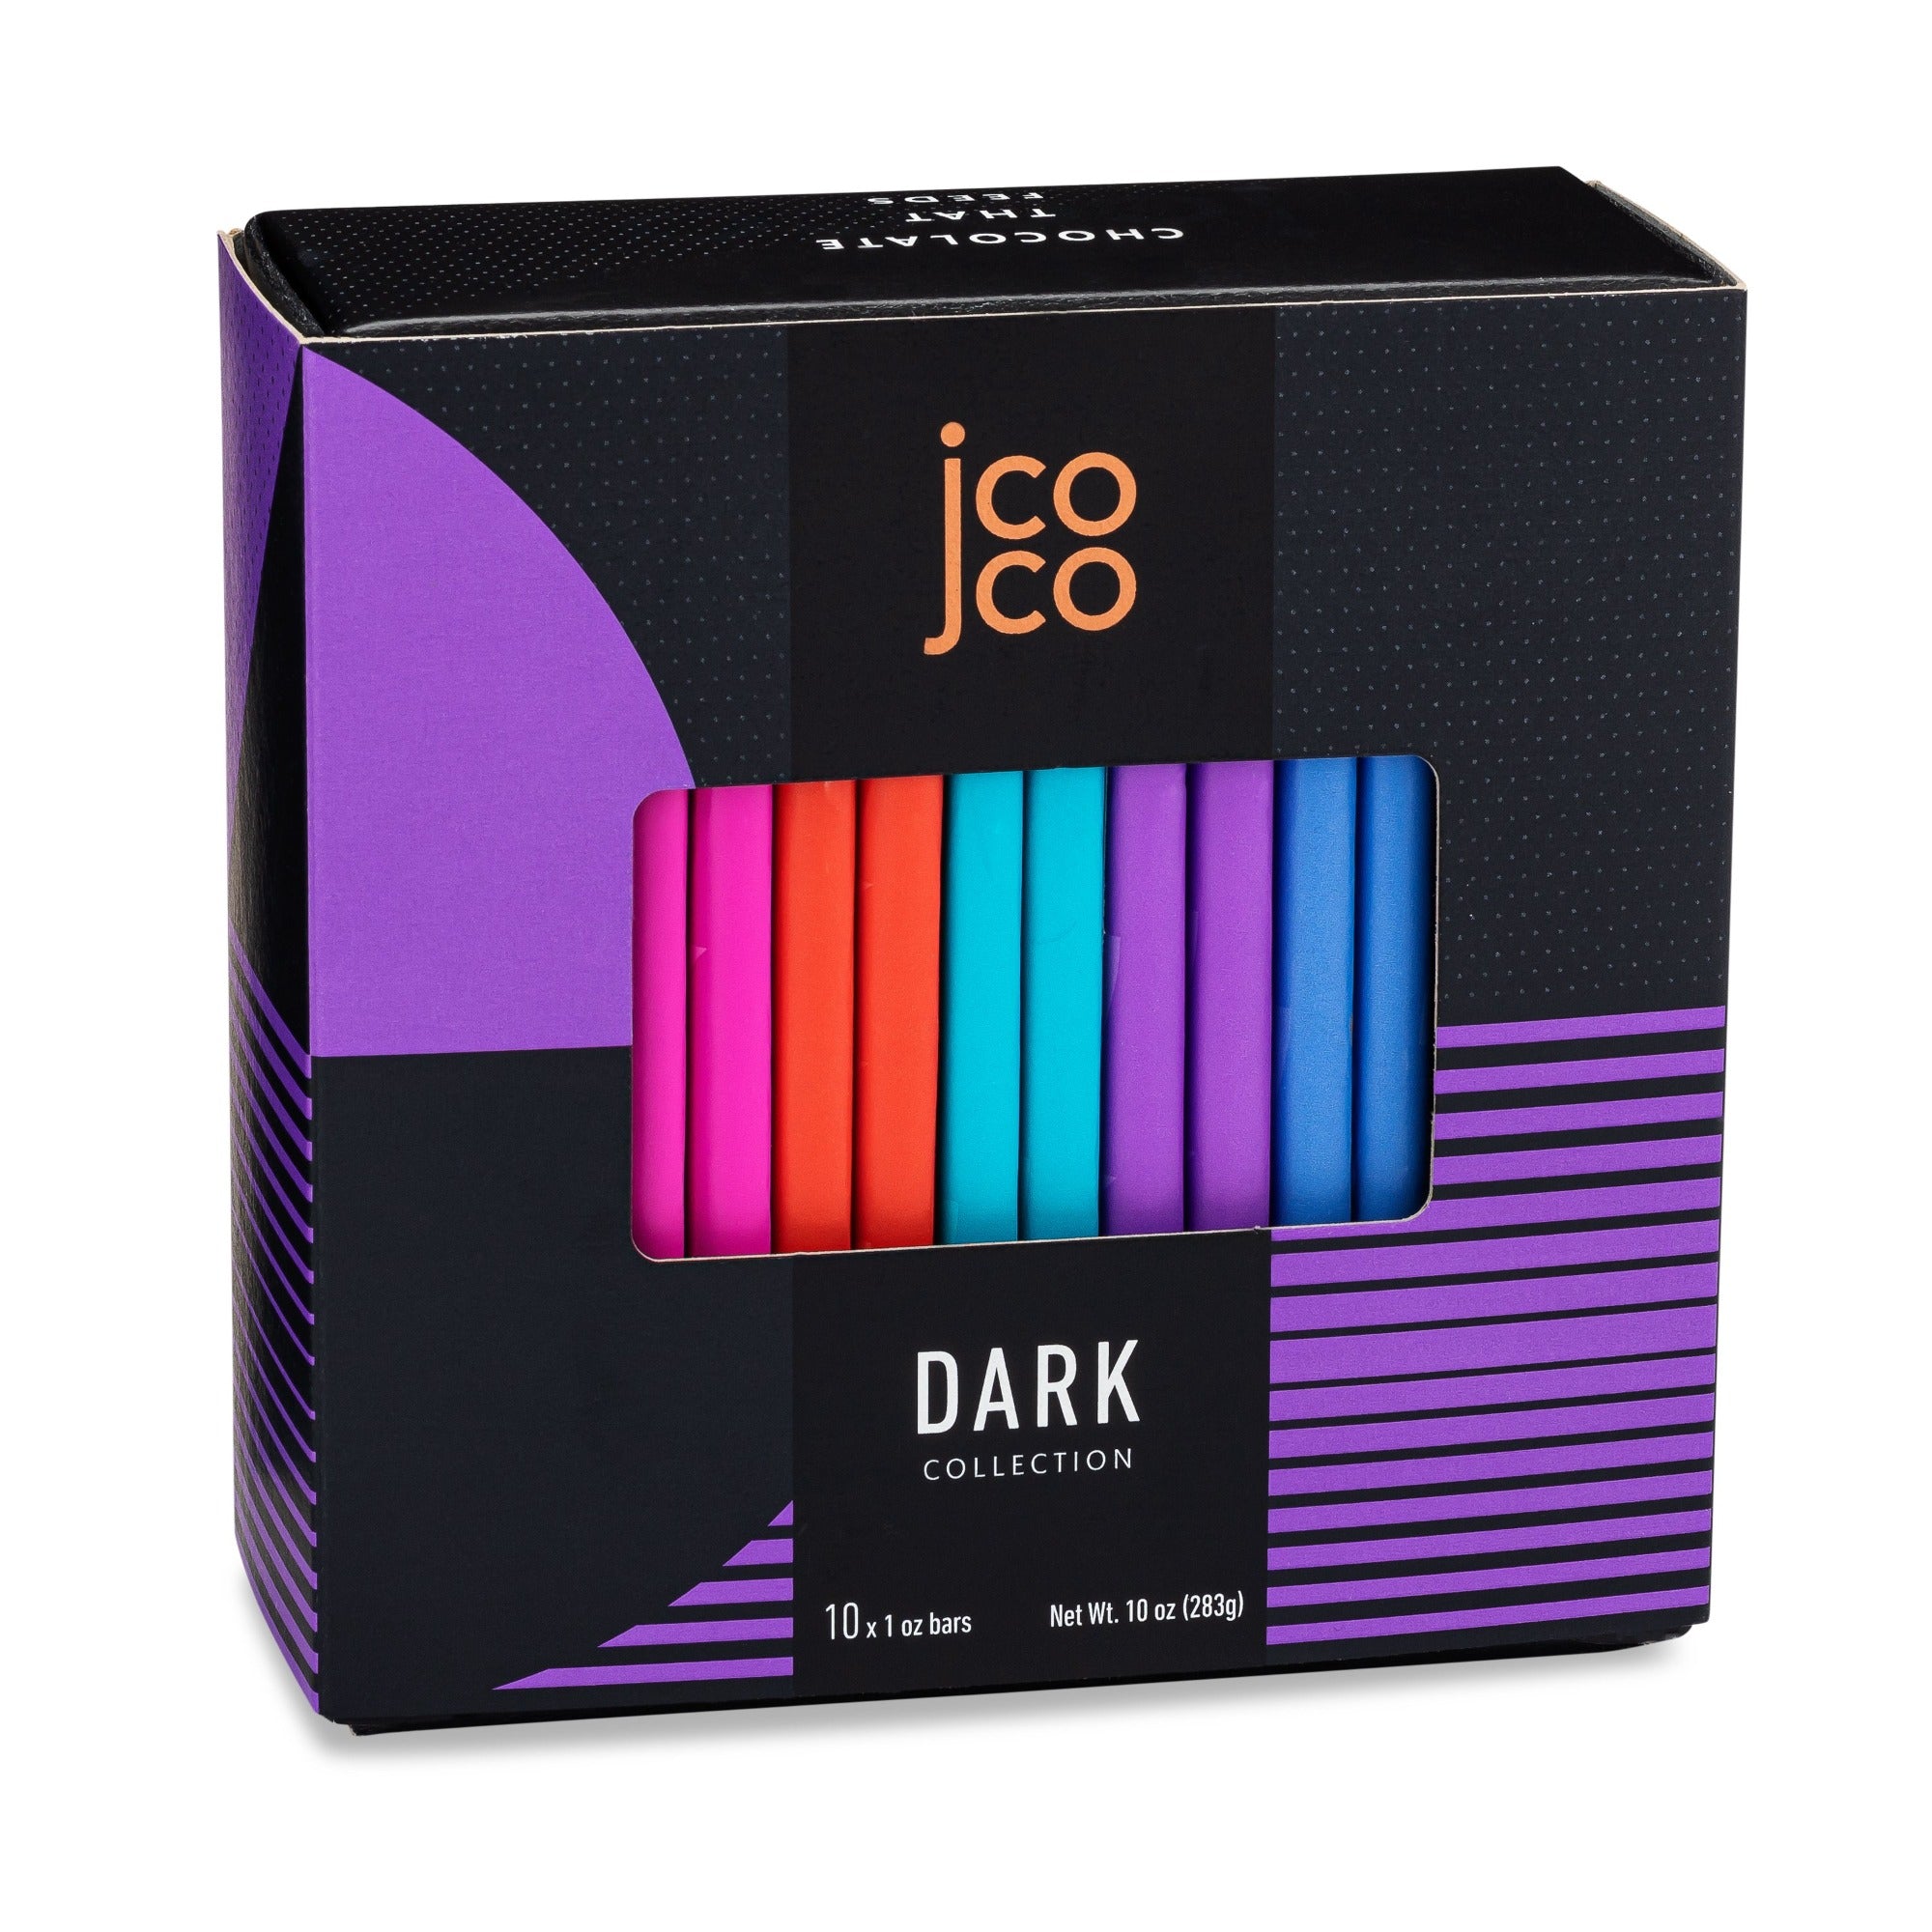 jcoco Dark chocolate bar Collection Gift Box